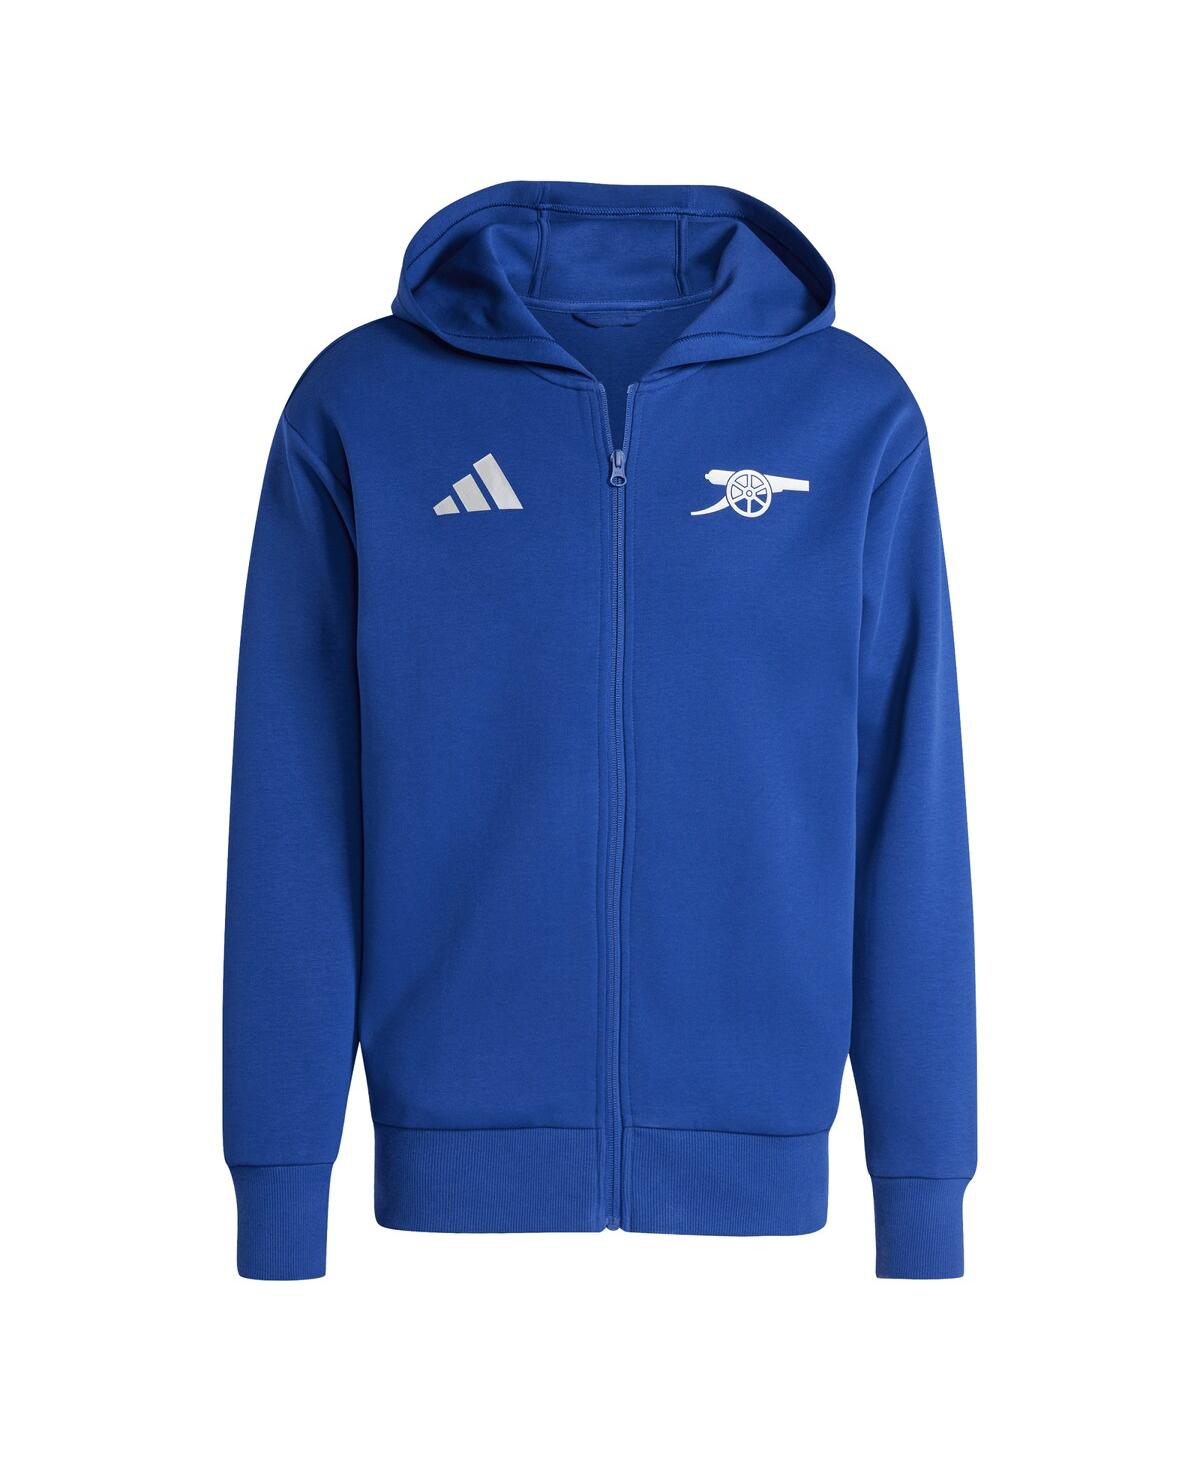 Adidas Originals Men's Blue Arsenal Anthem Full-zip Hoodie